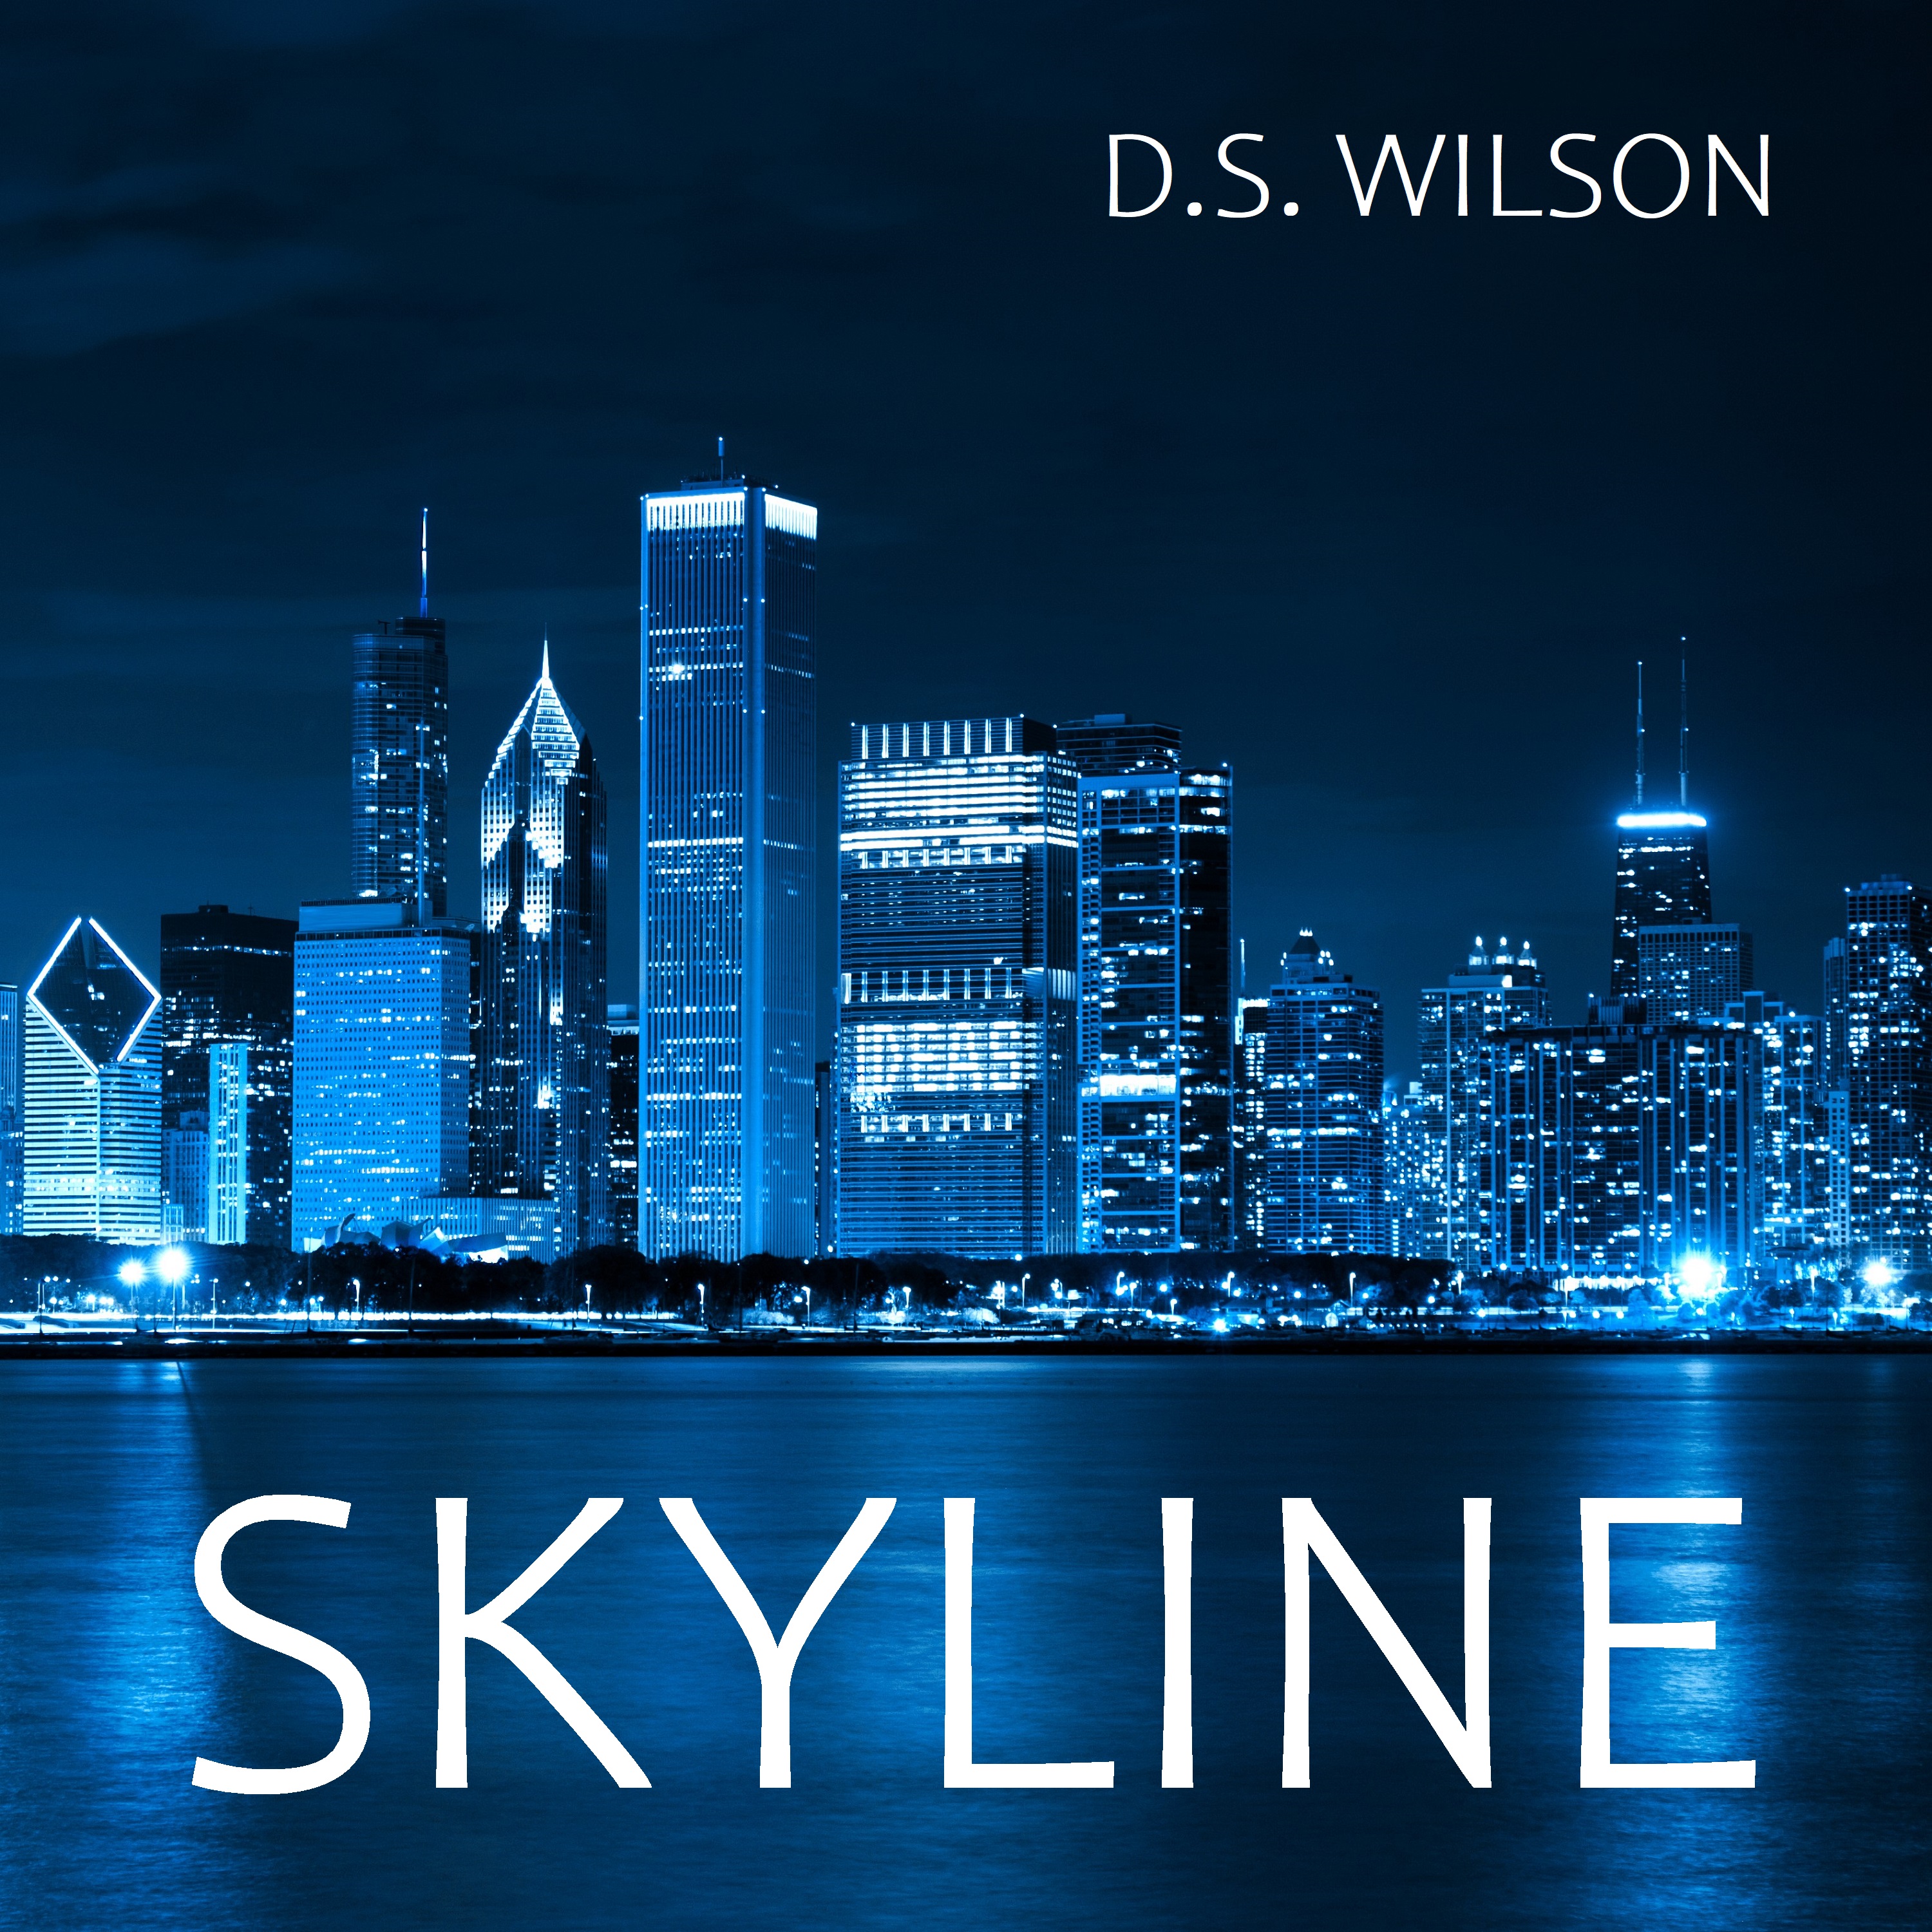 New Album Release: "Skyline" by D.S. Wilson